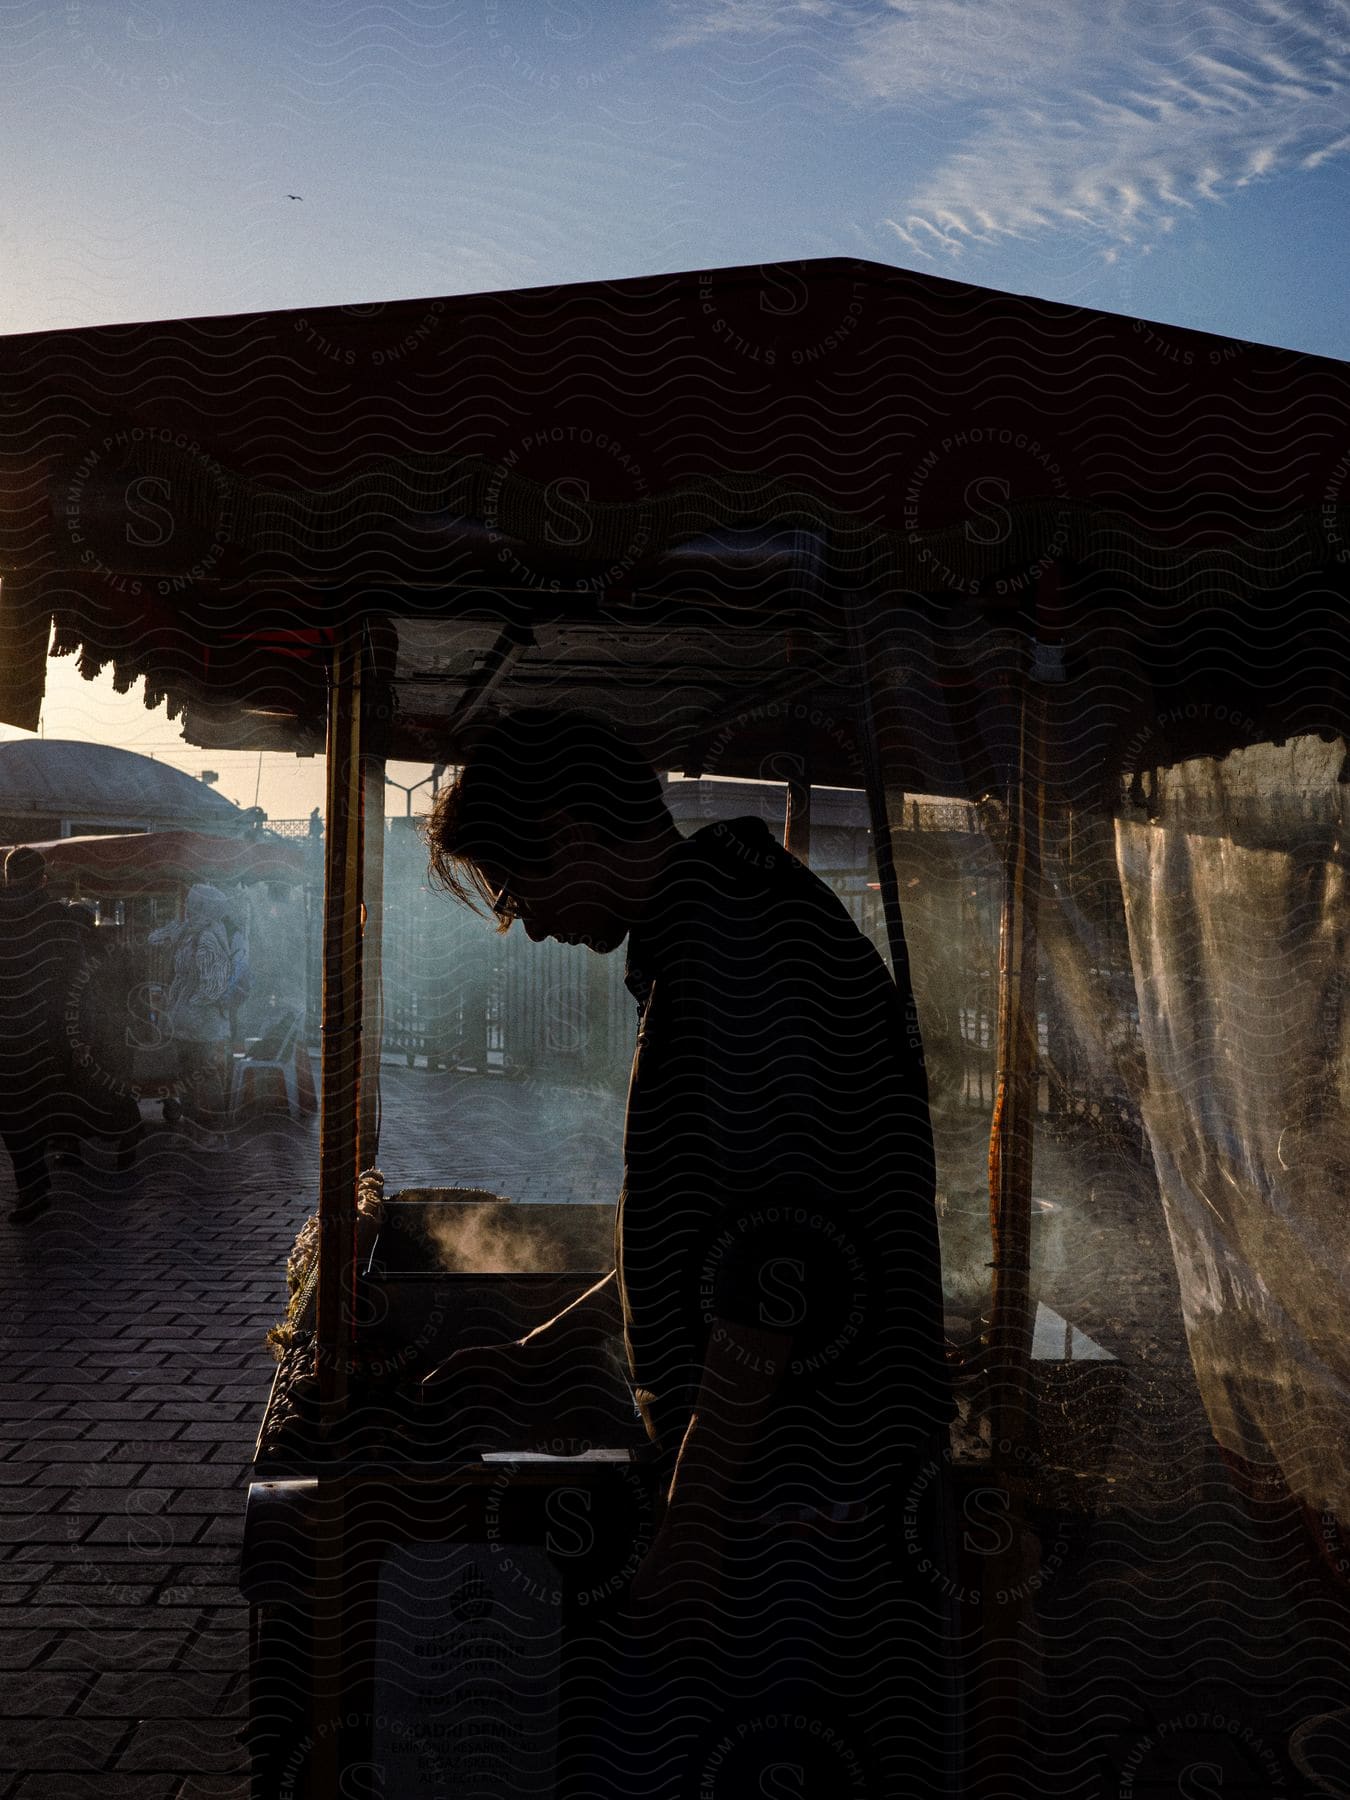 A man preparing food at a food stand in an urban public market